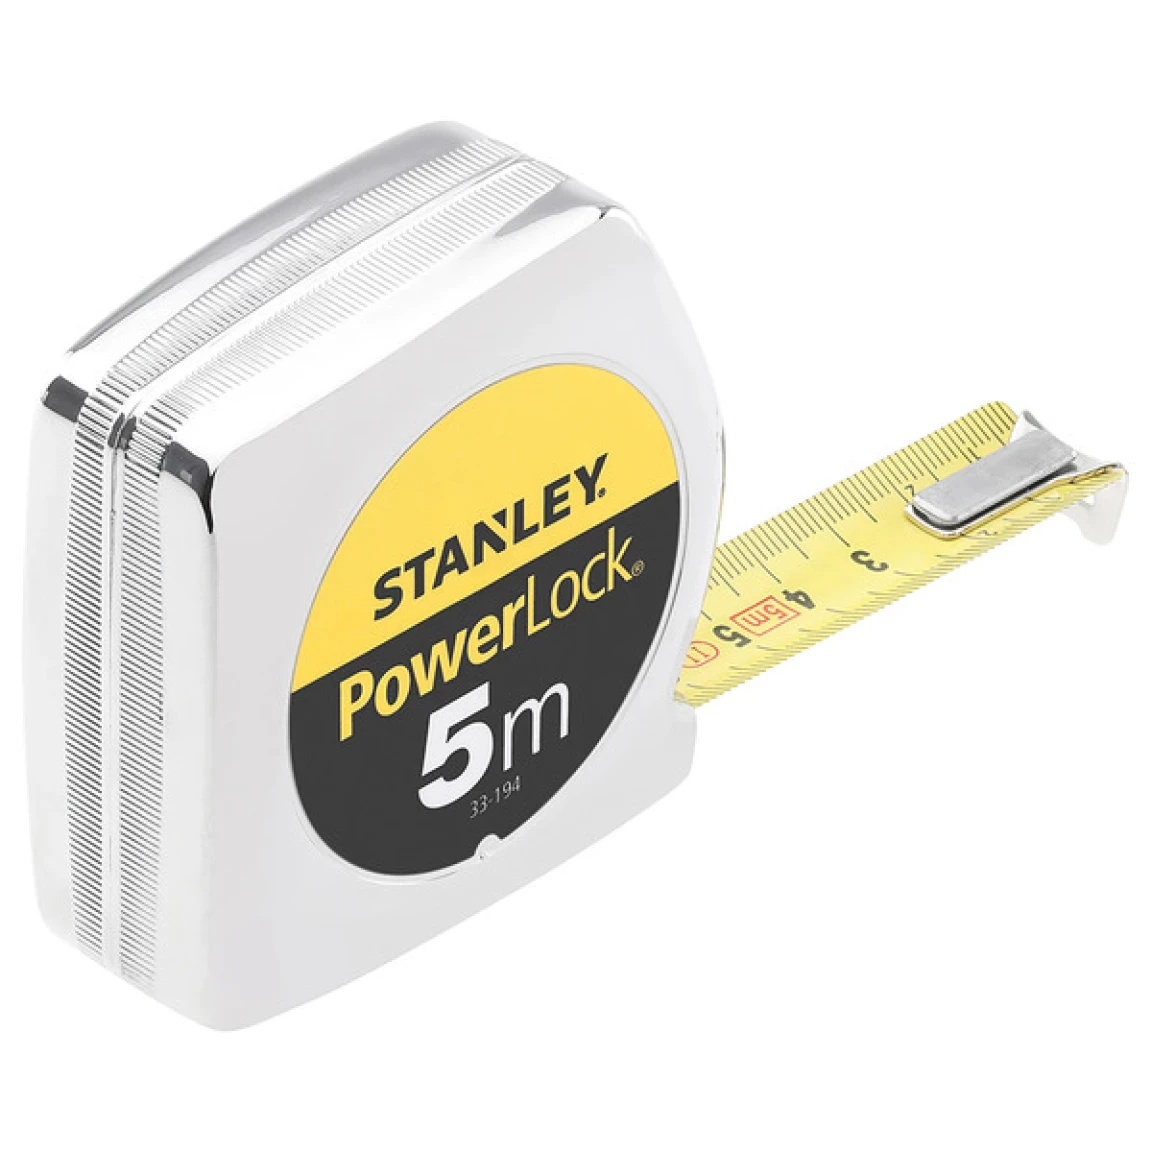 Mètre à ruban Stanley Powerlock 5m - 25mm 